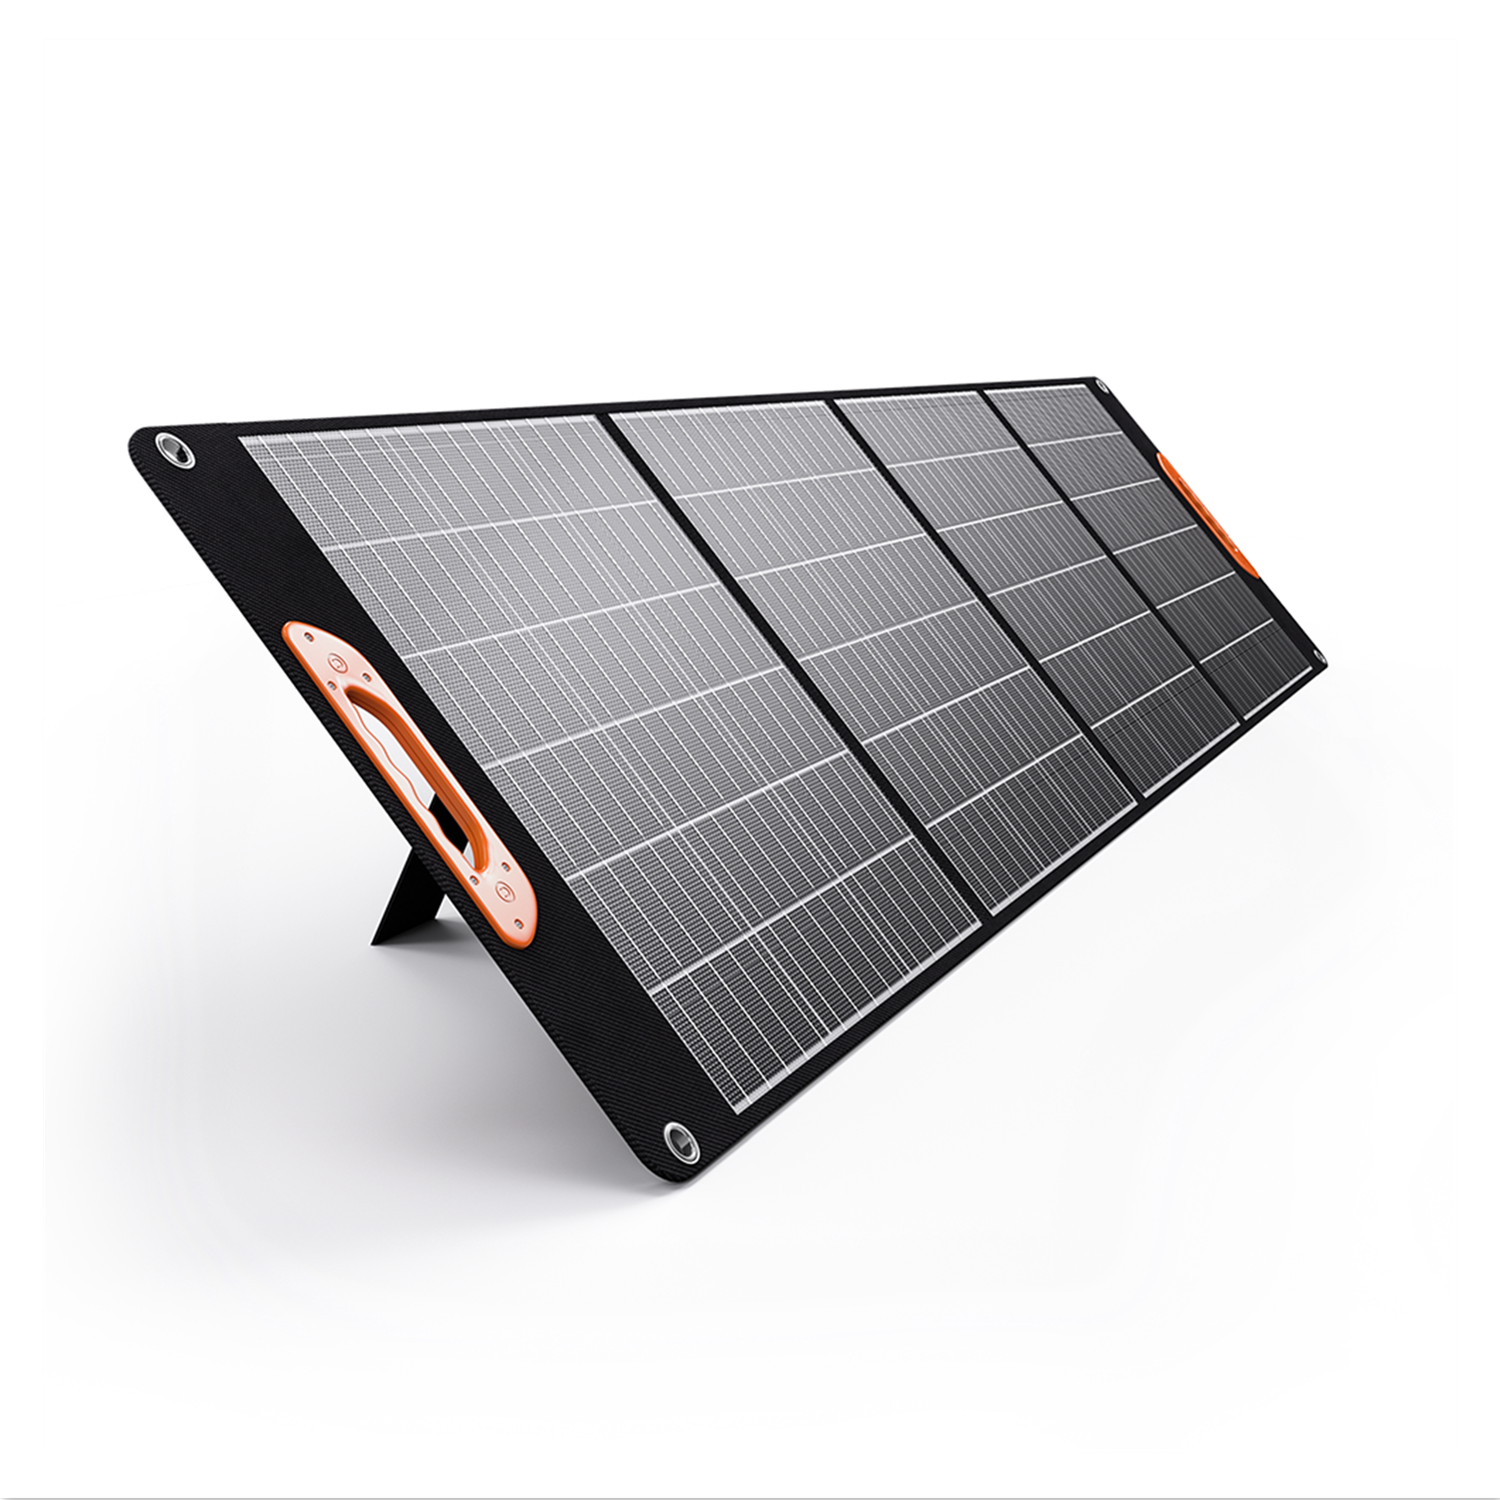 OUTLUX Portable 200w Solar Panels